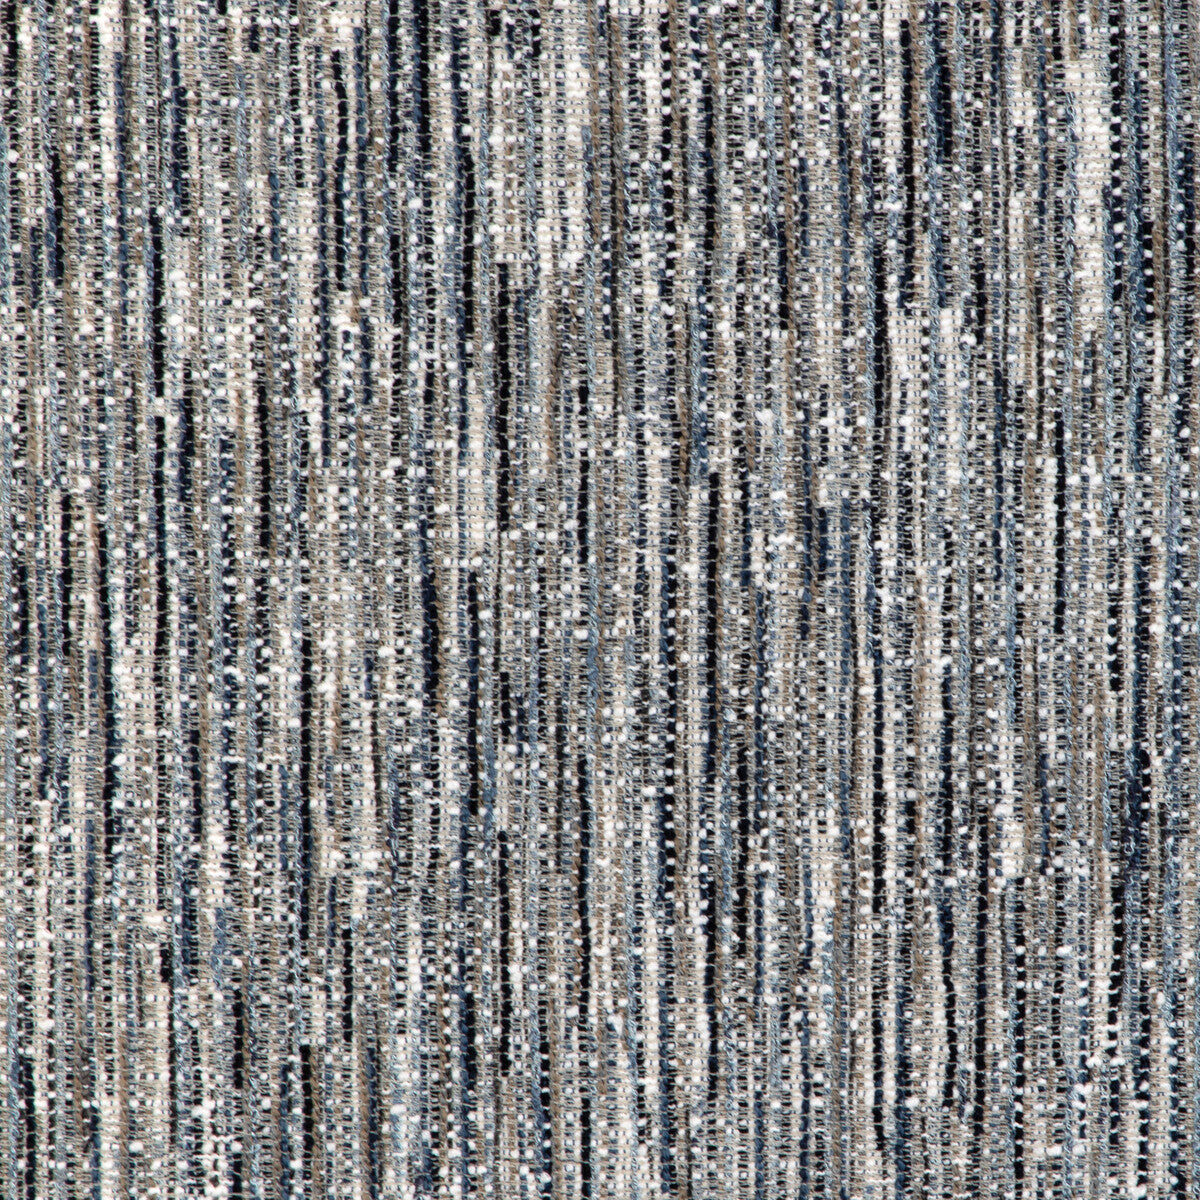 Kravet Smart fabric in 36659-5 color - pattern 36659.5.0 - by Kravet Smart in the Performance Kravetarmor collection